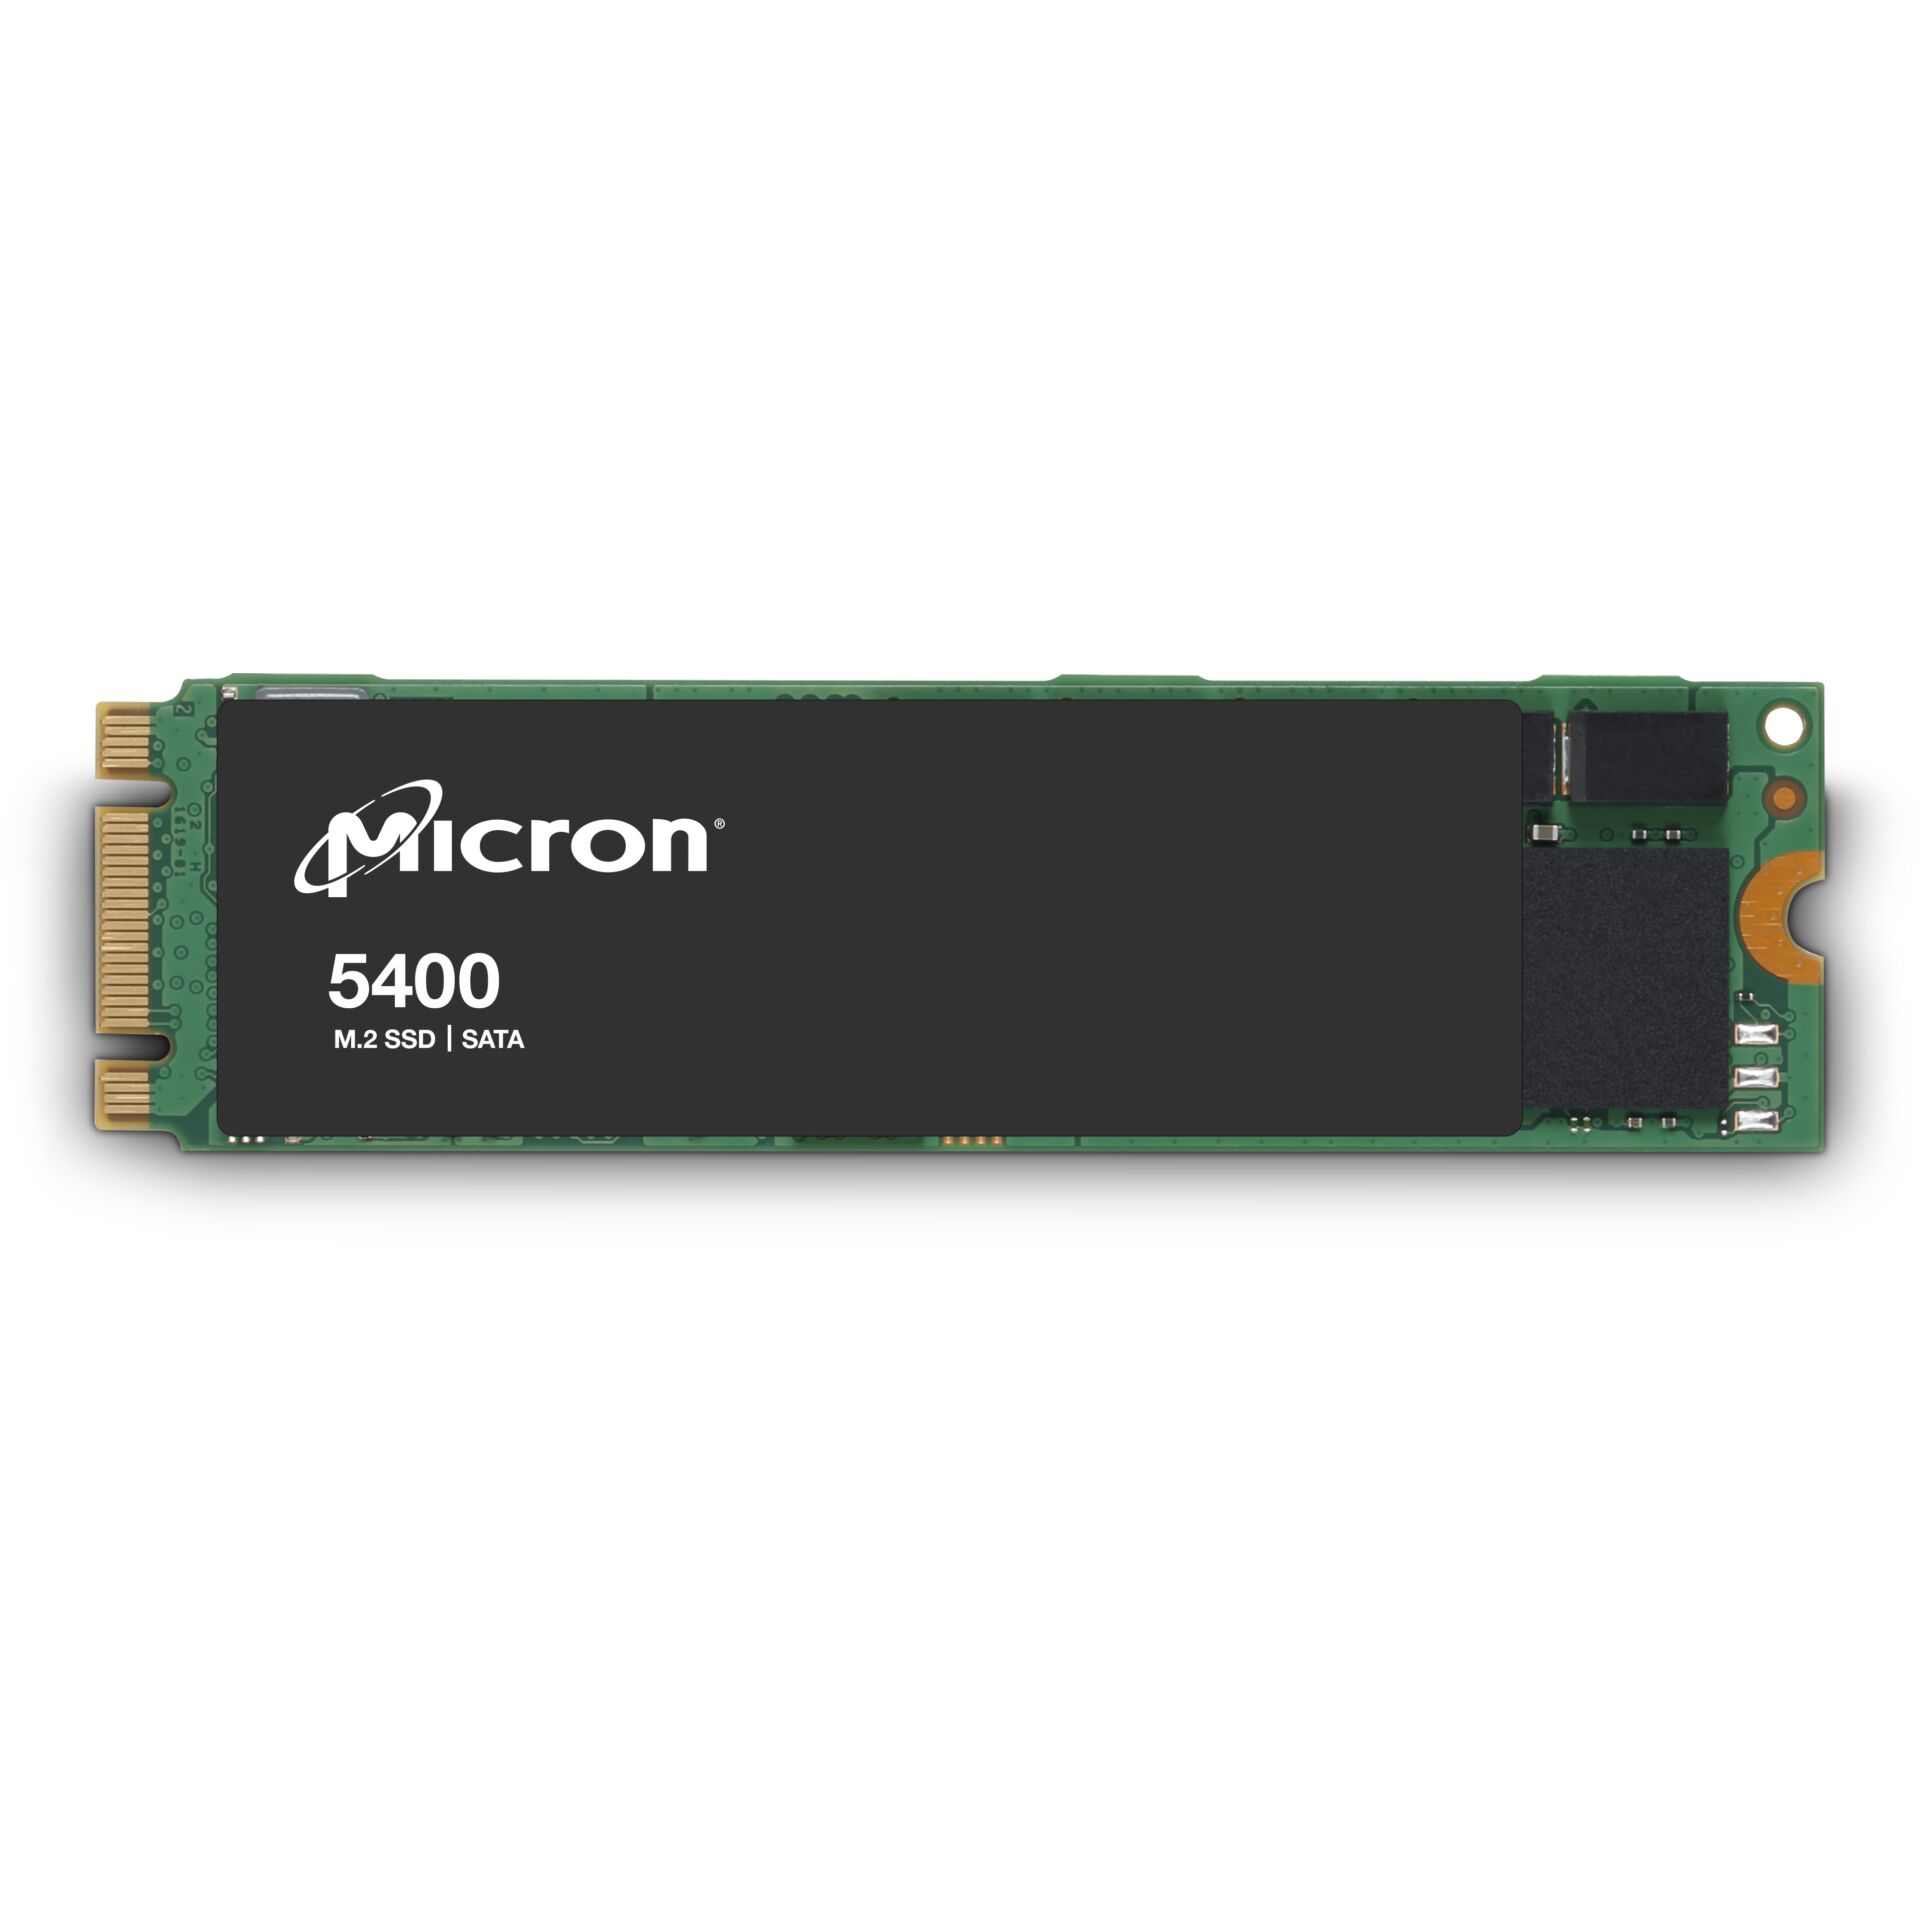 Micron 5400 PRO 960GB SATA M.2